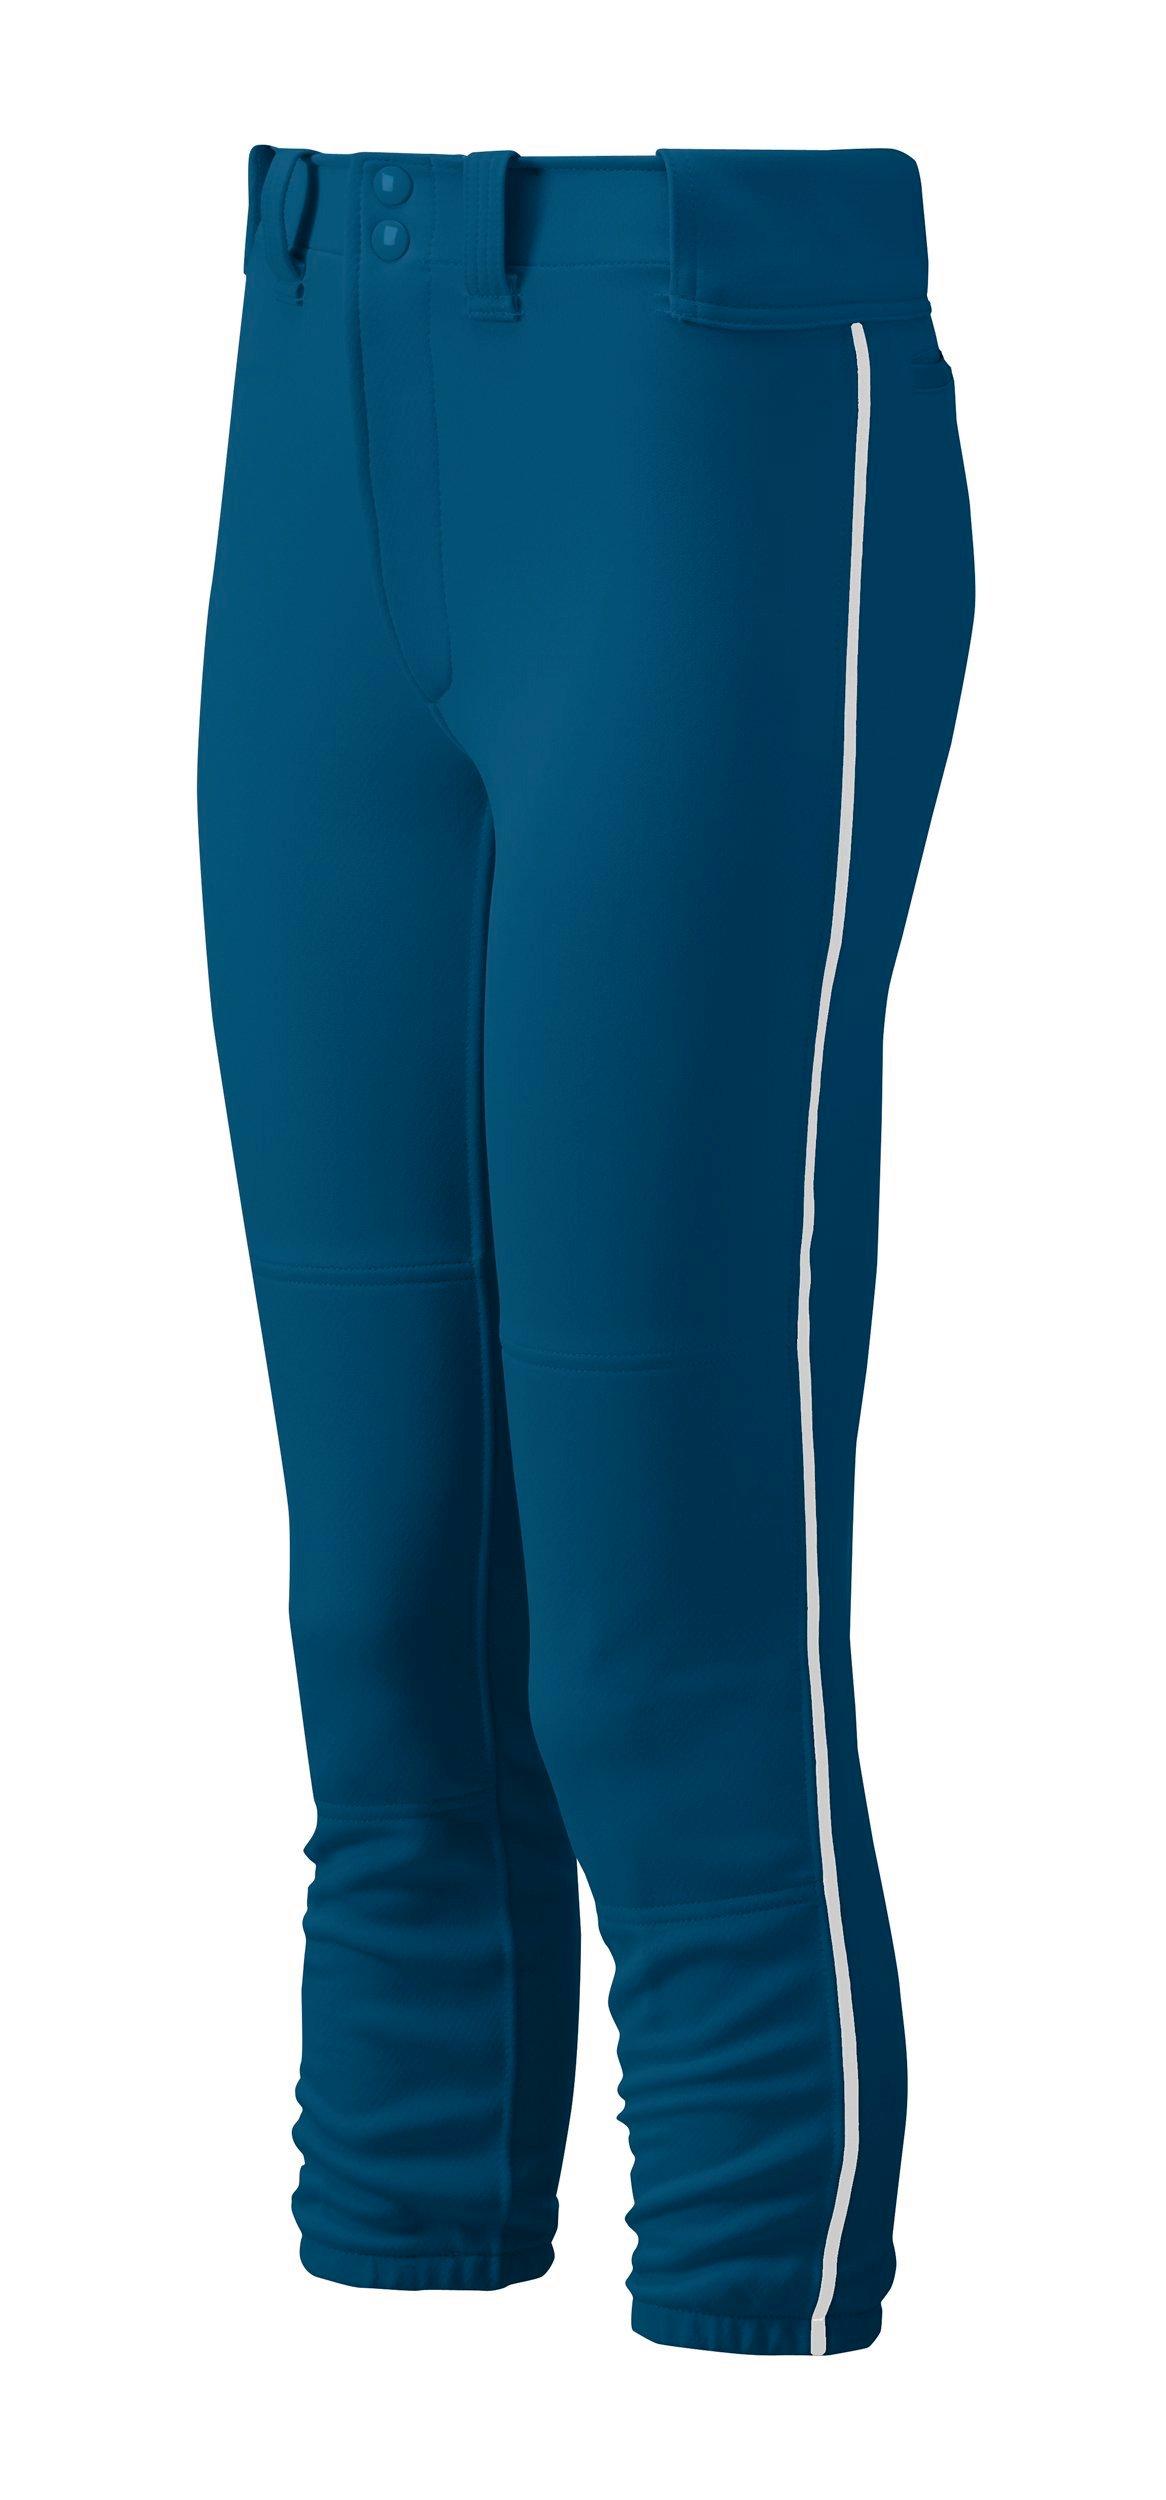 navy blue mizuno softball pants